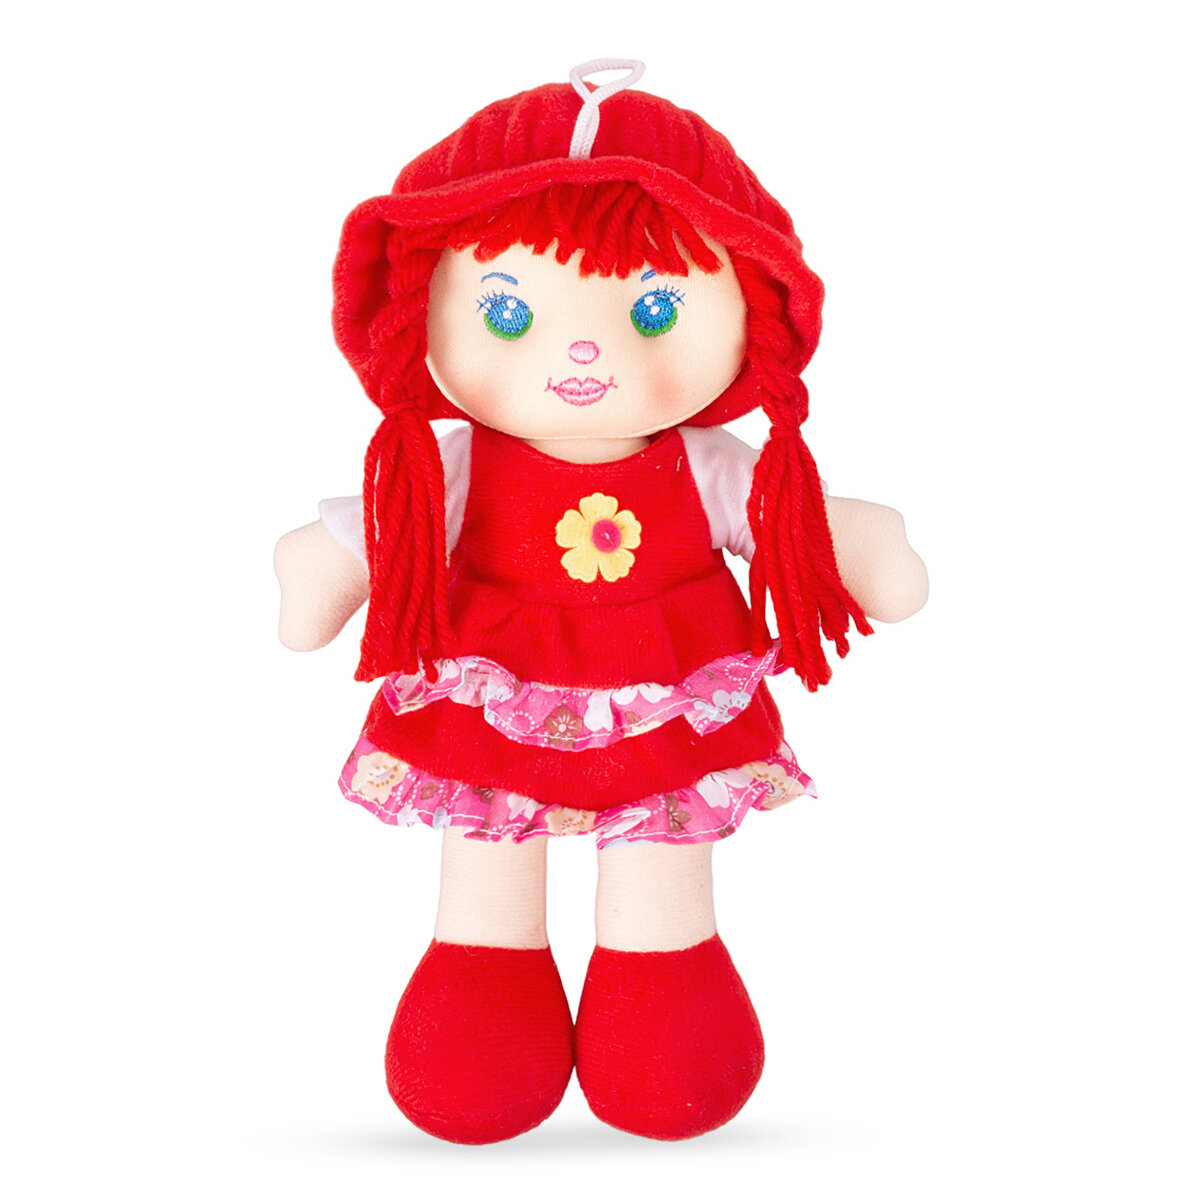 Мягкая игрушка Кукла, цвет красный (E156010)